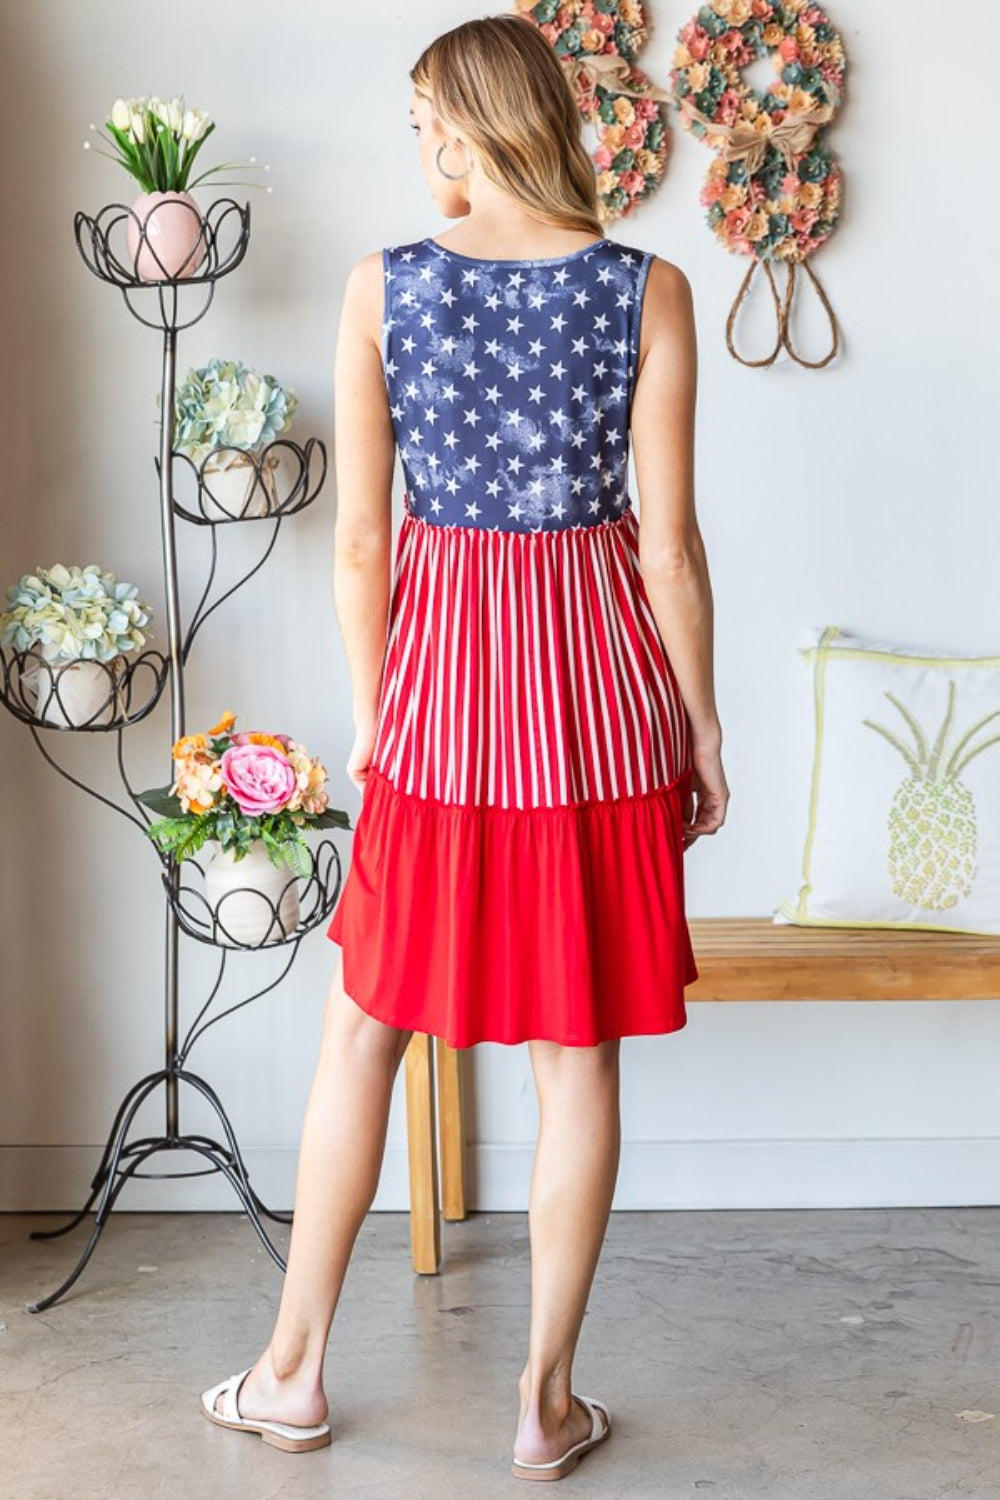 Heimish Full Size US Flag Theme Contrast Tank Dress - Vogue Fusion